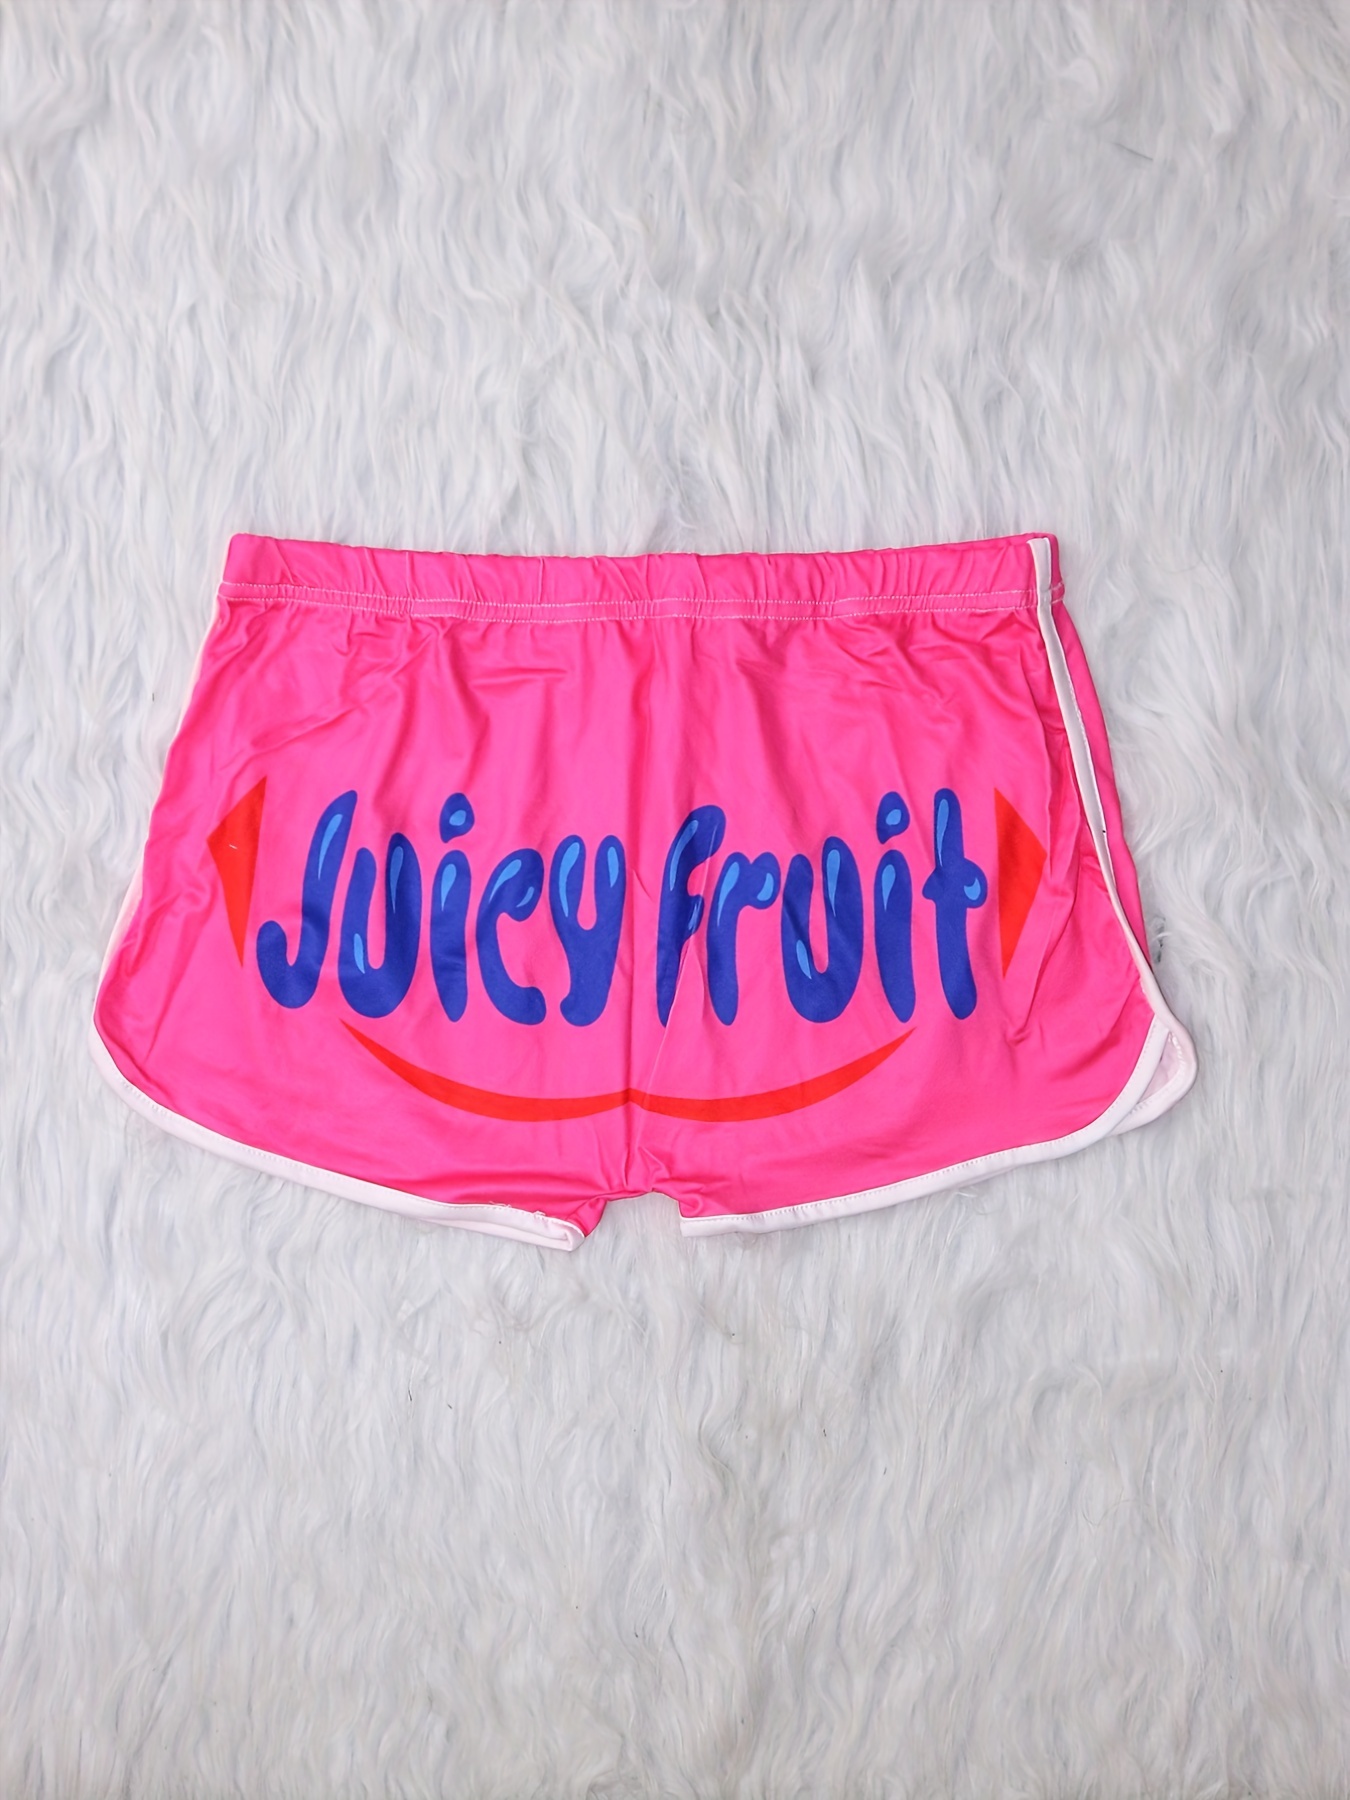 Women Fashion Wifey Letter Printed Sexy Shorts Panties Elastic